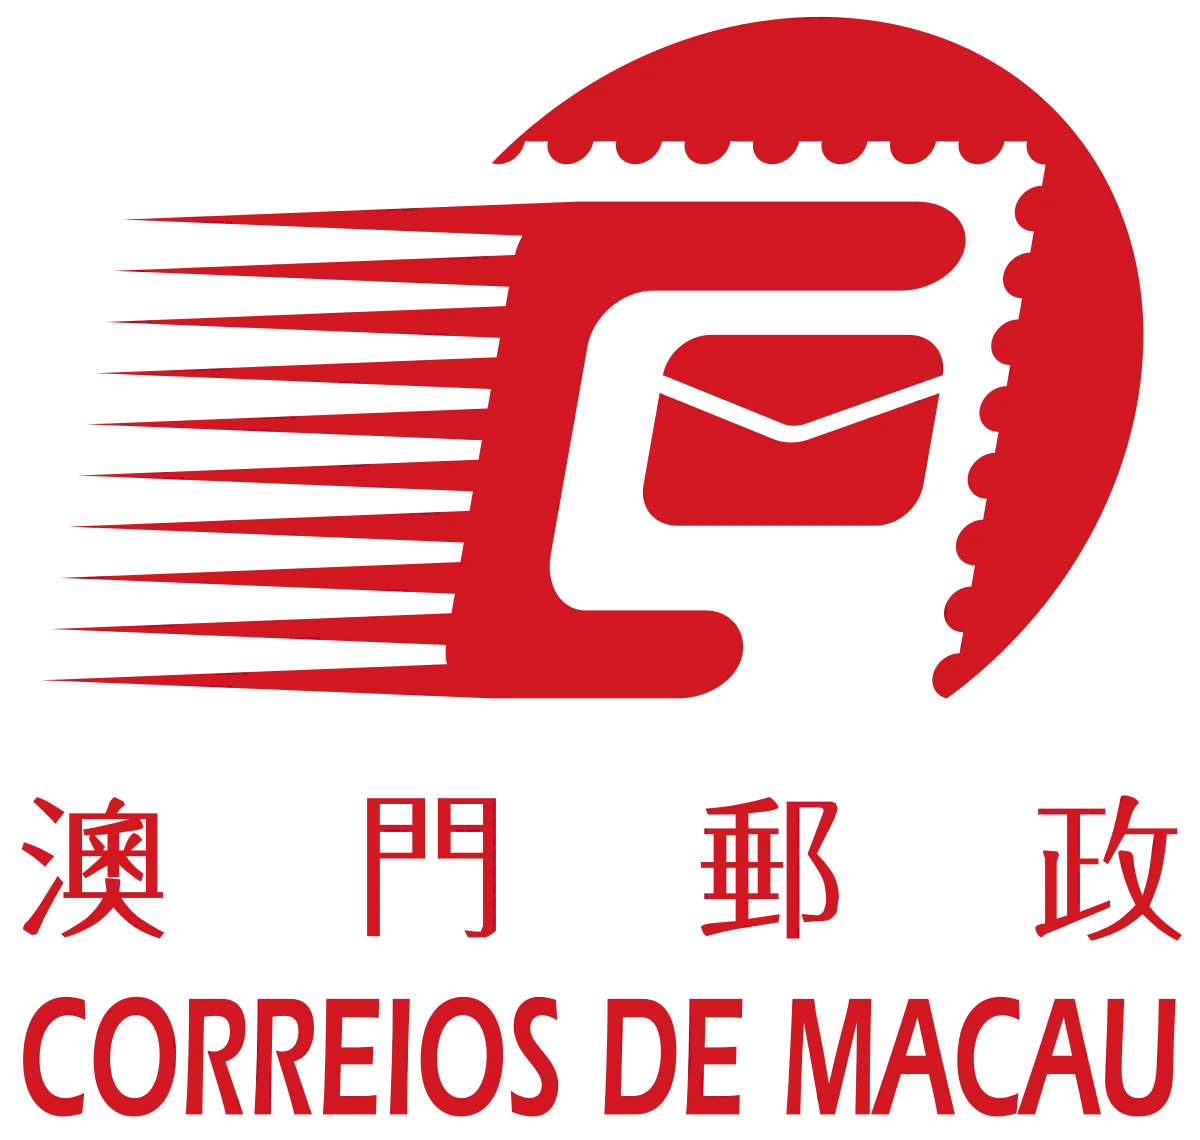  Macau Post